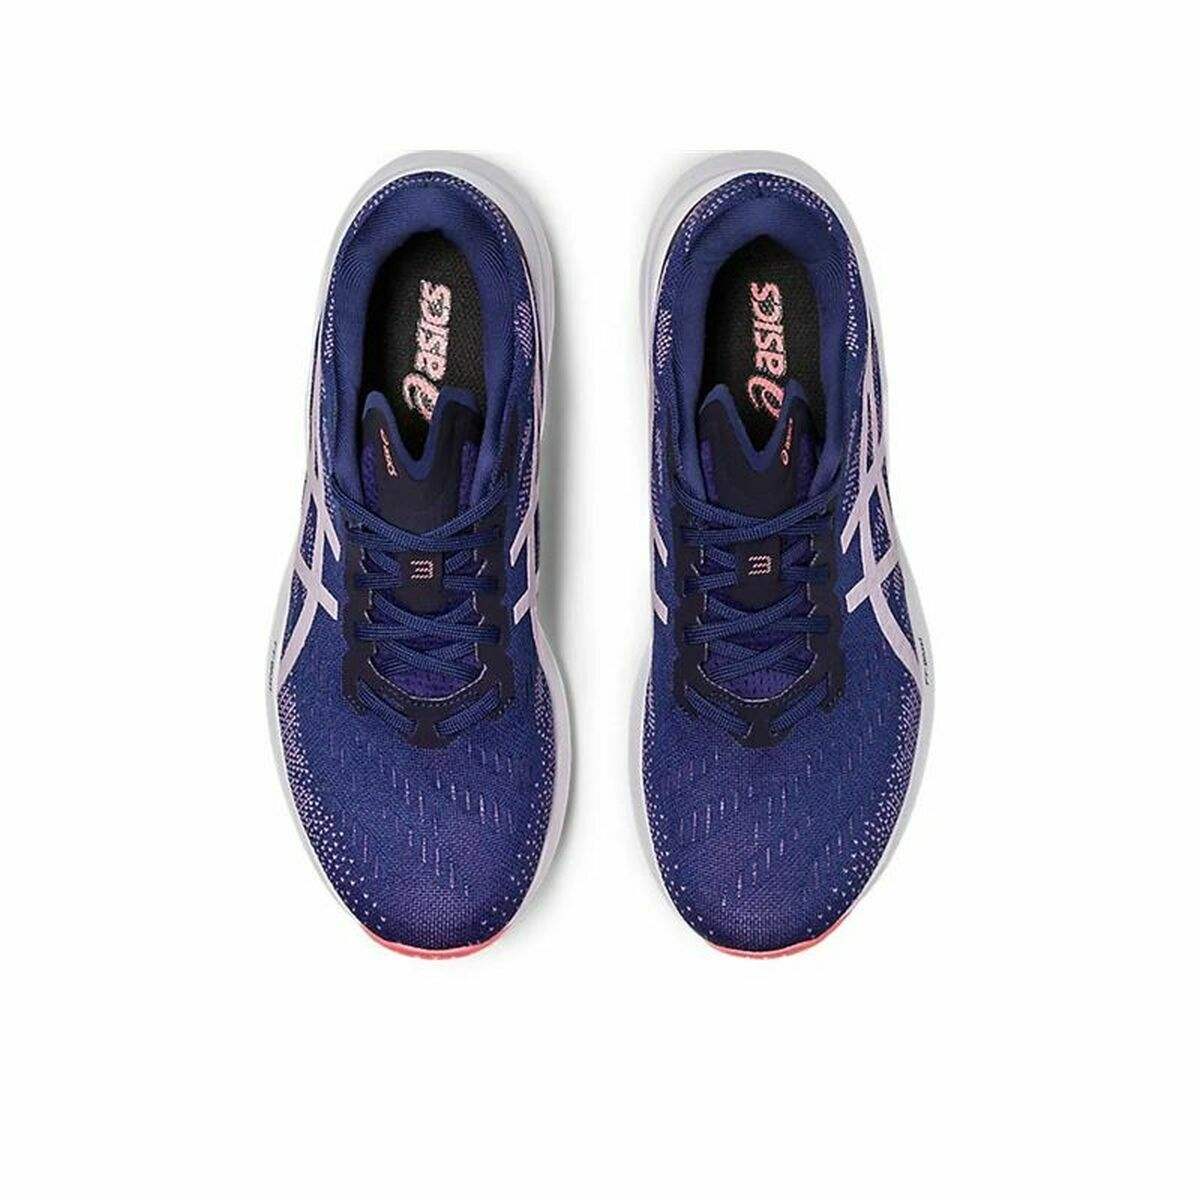 Chaussures de Running pour Adultes Asics Dynablast 3 Femme Bleu foncé - Asics - Jardin D'Eyden - jardindeyden.fr